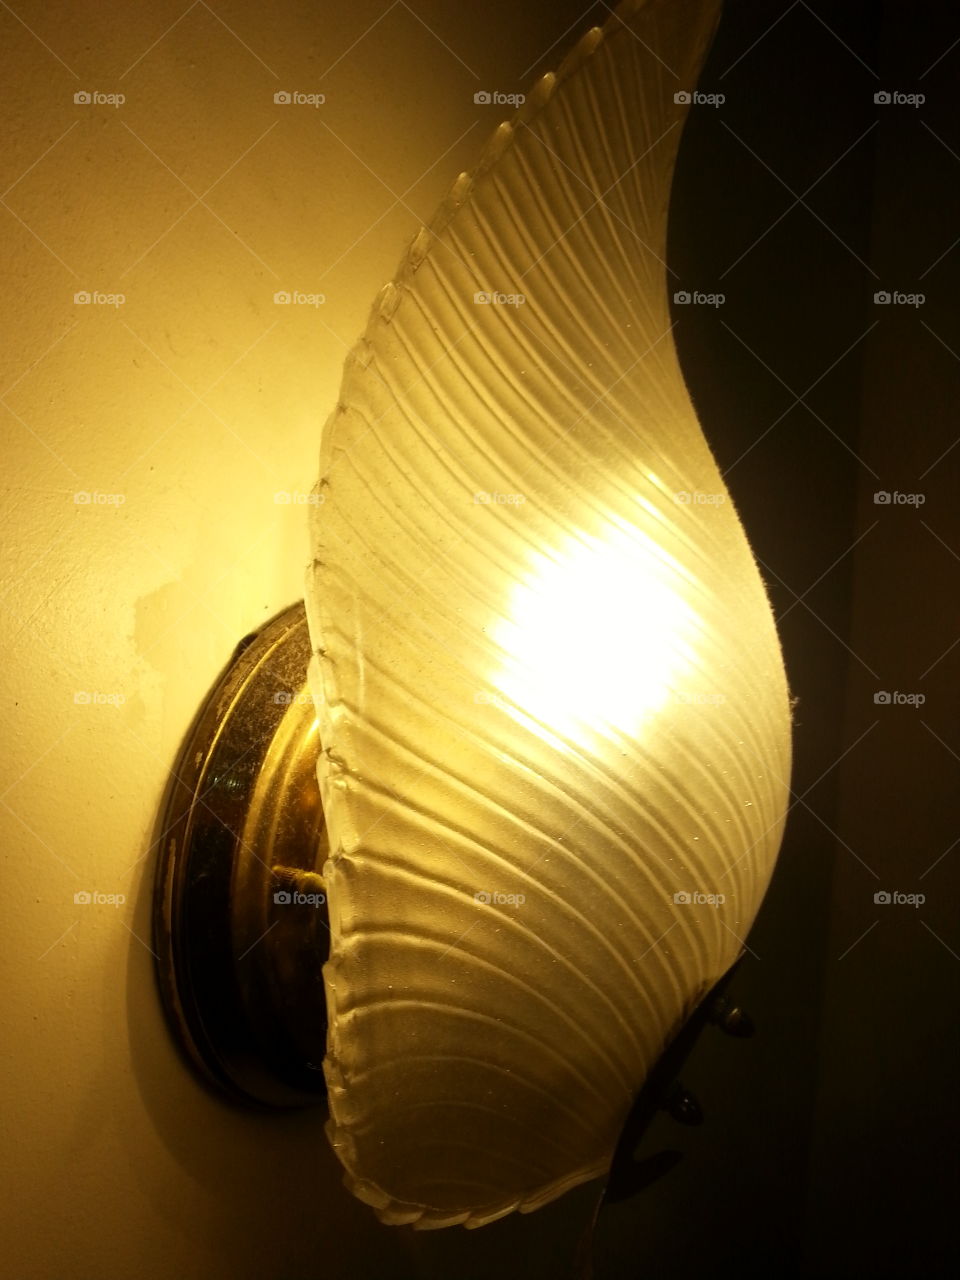 My wall light